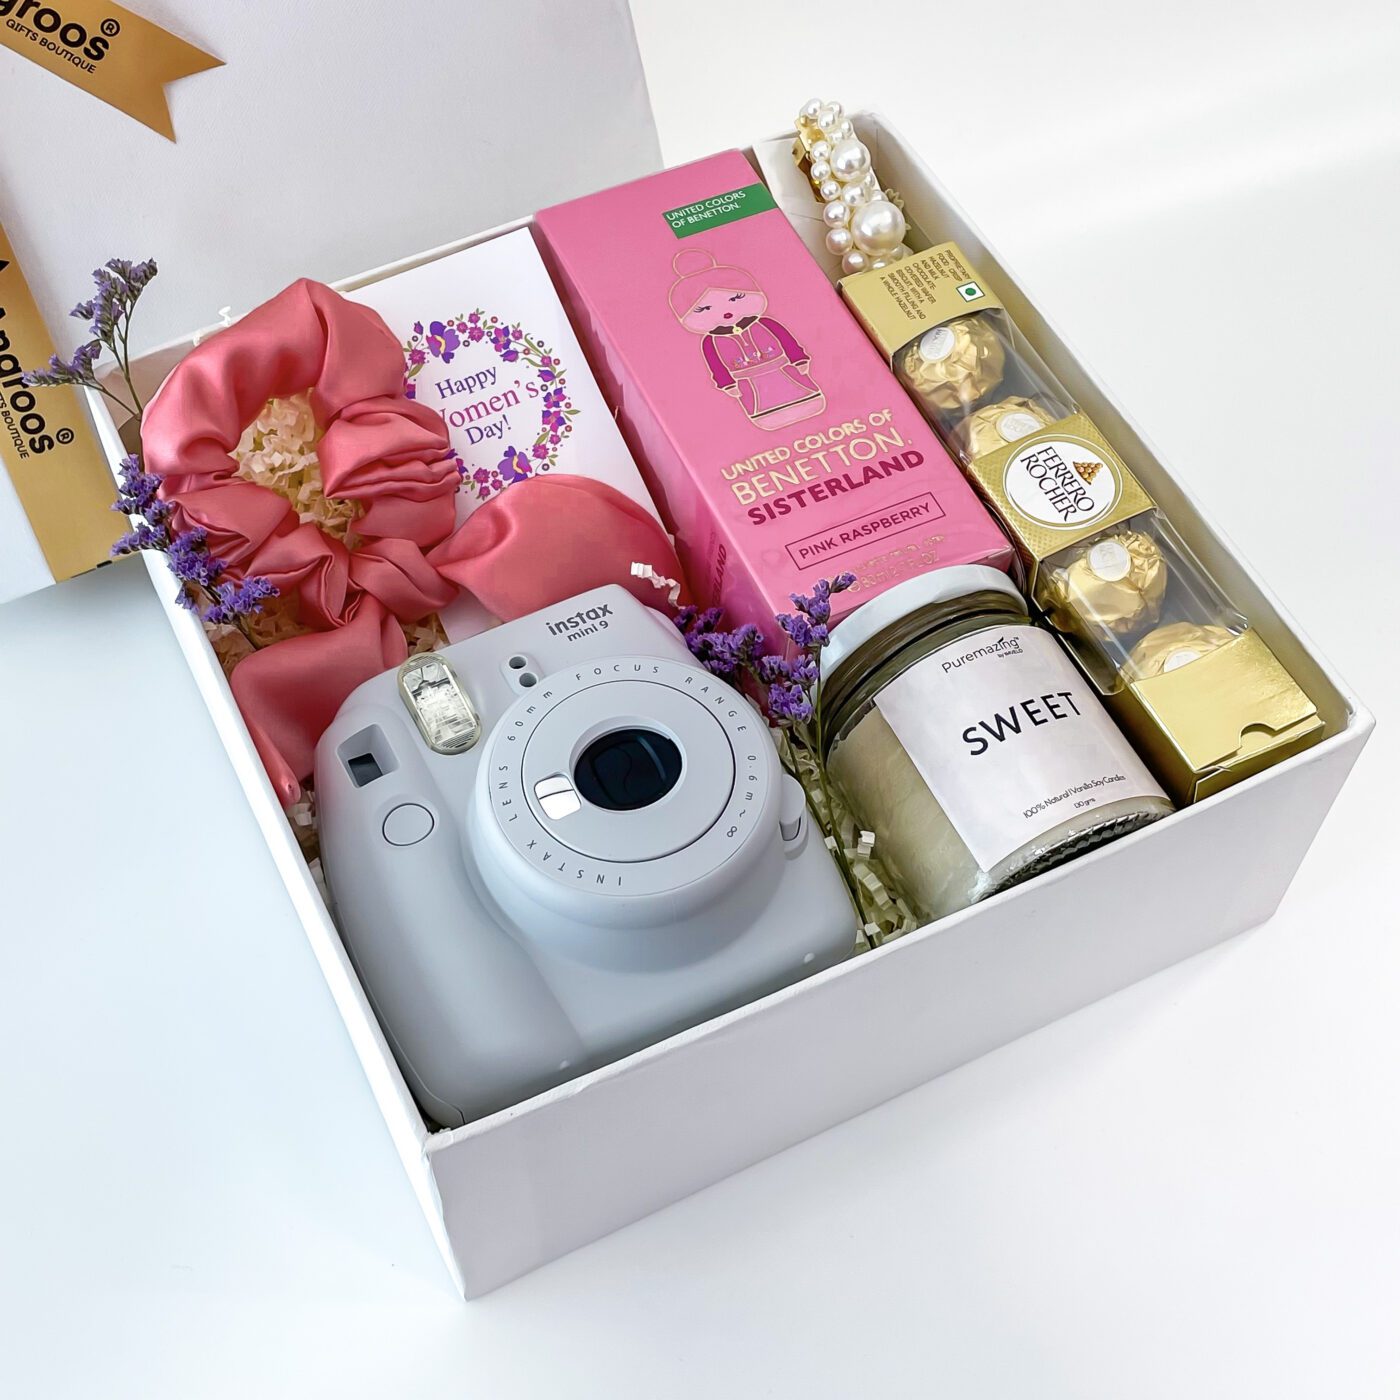 Aggregate more than 160 polaroid camera gift ideas latest